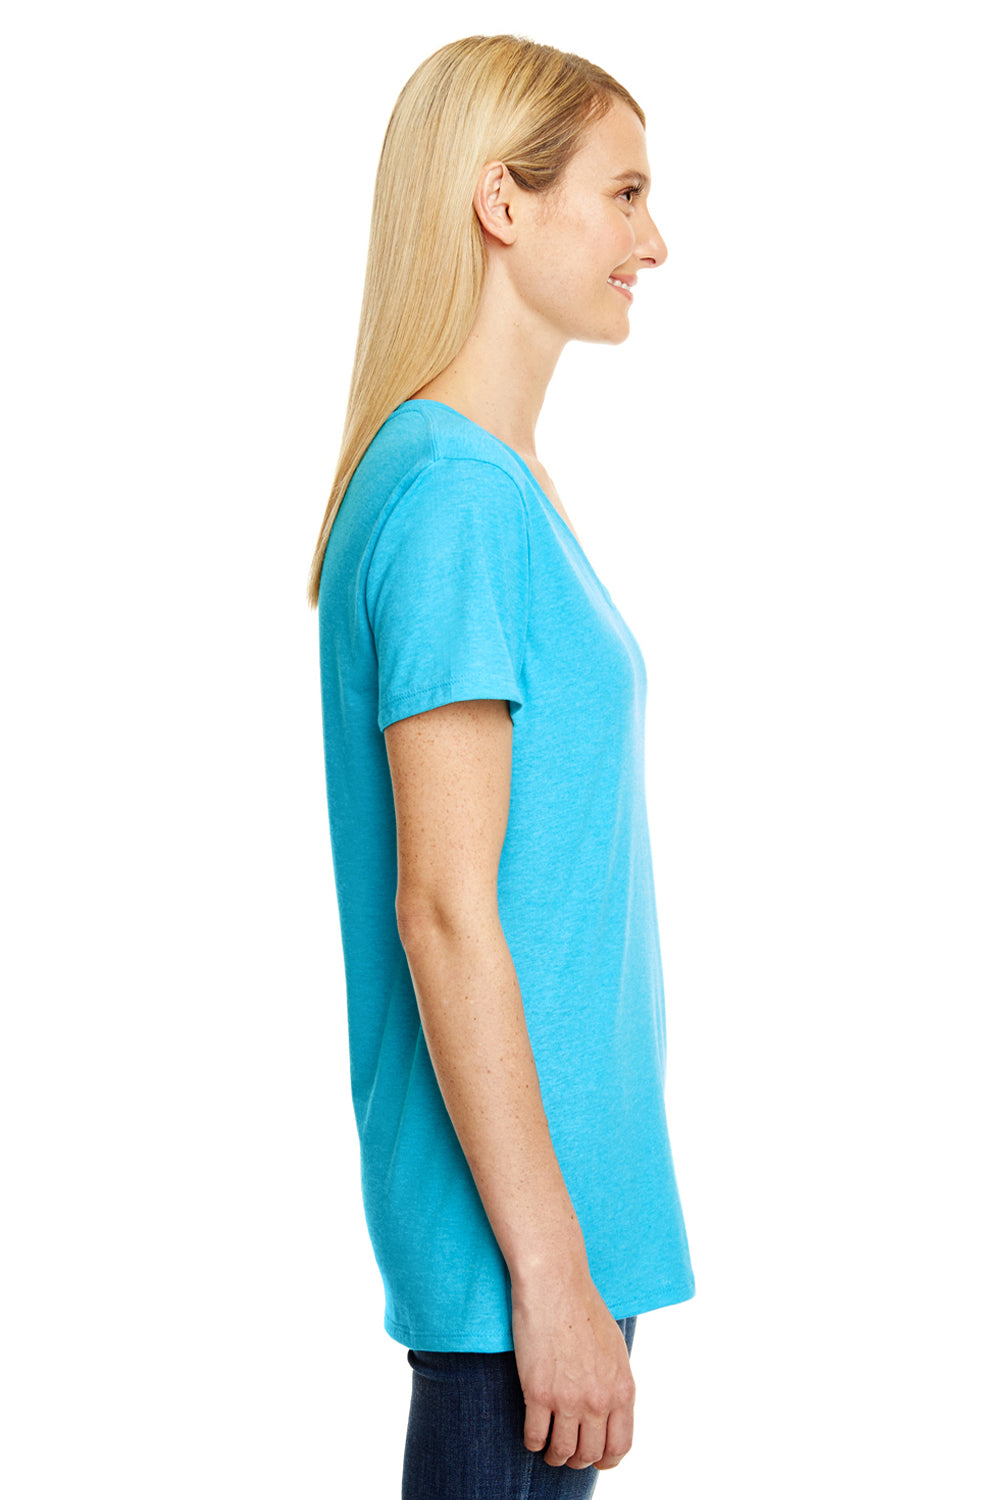 Hanes 42VT Womens X-Temp FreshIQ Moisture Wicking Short Sleeve V-Neck T-Shirt Turquoise Blue Side